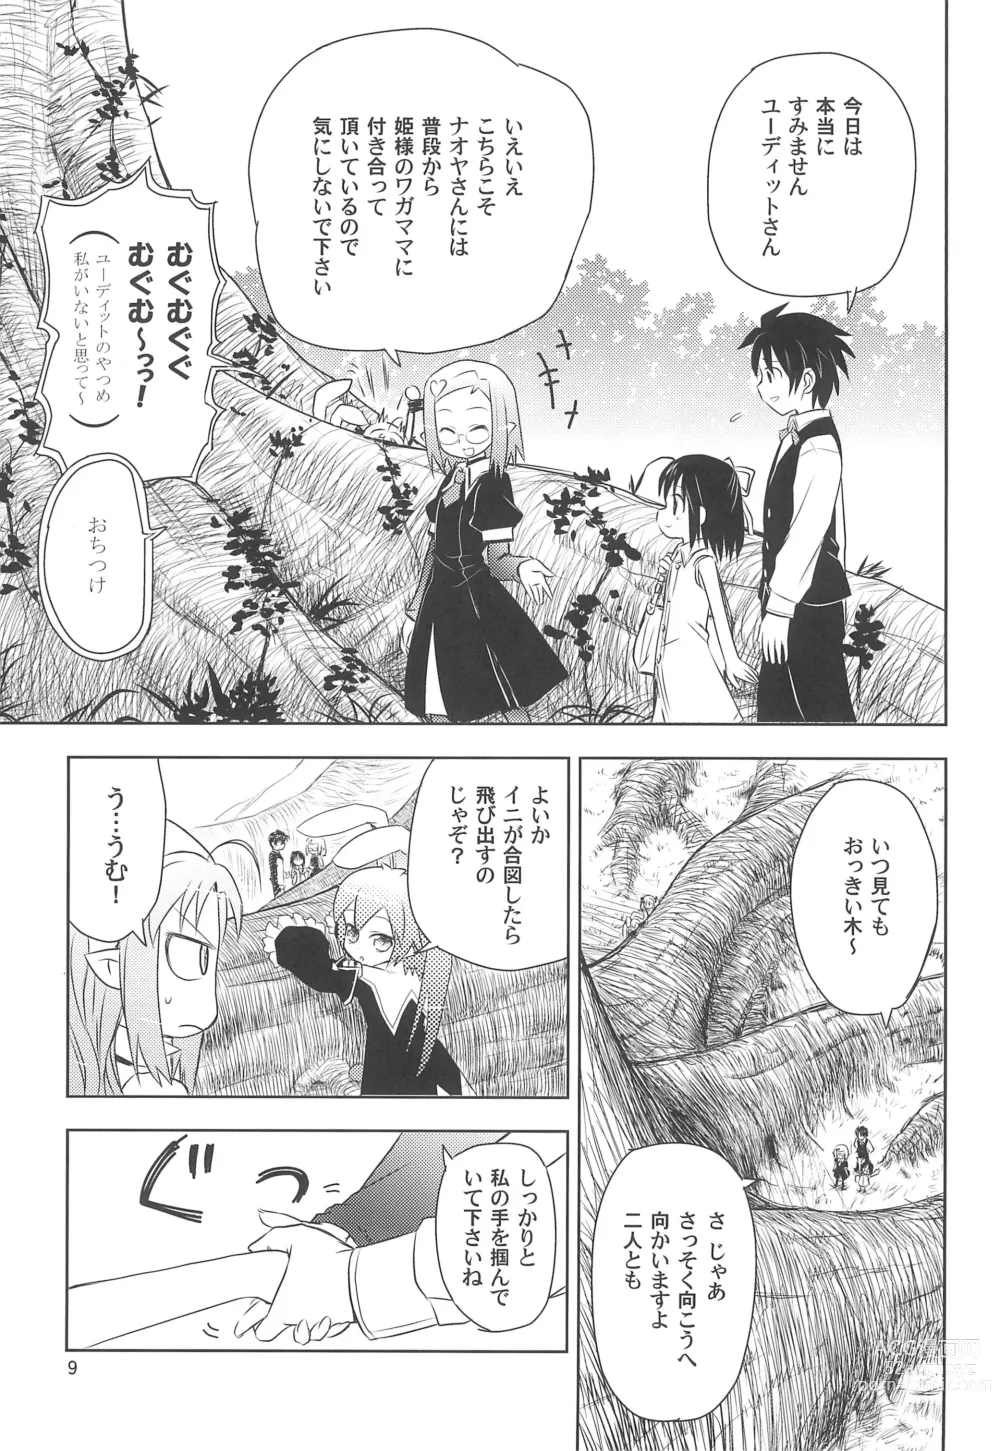 Page 9 of doujinshi Maigo no Maigo no Hime-sama Plus